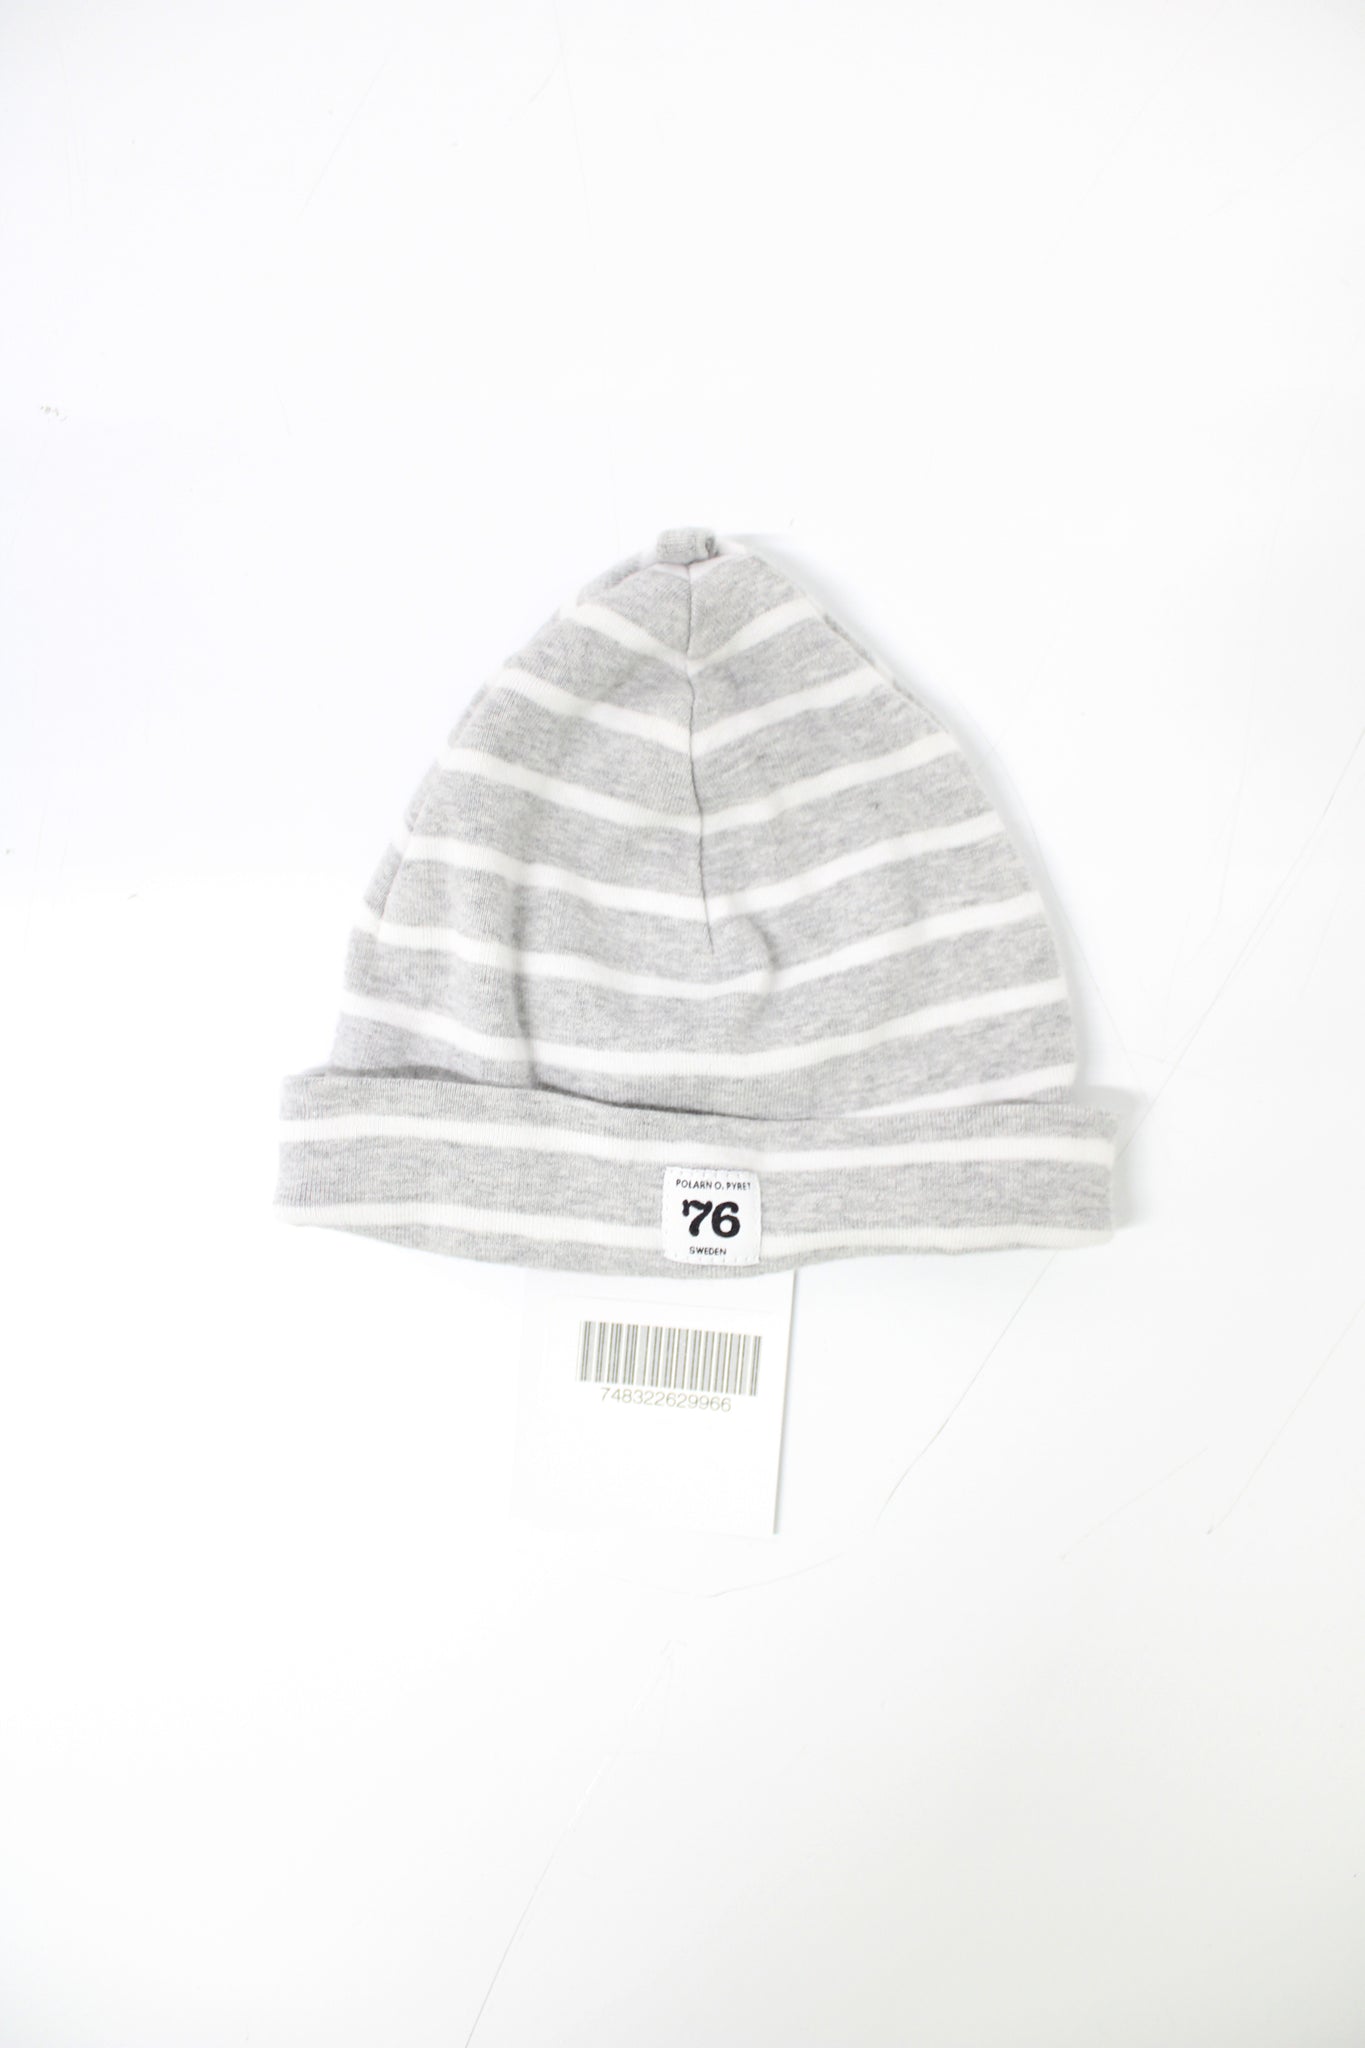 Baby Hat 1-4m / 40/42